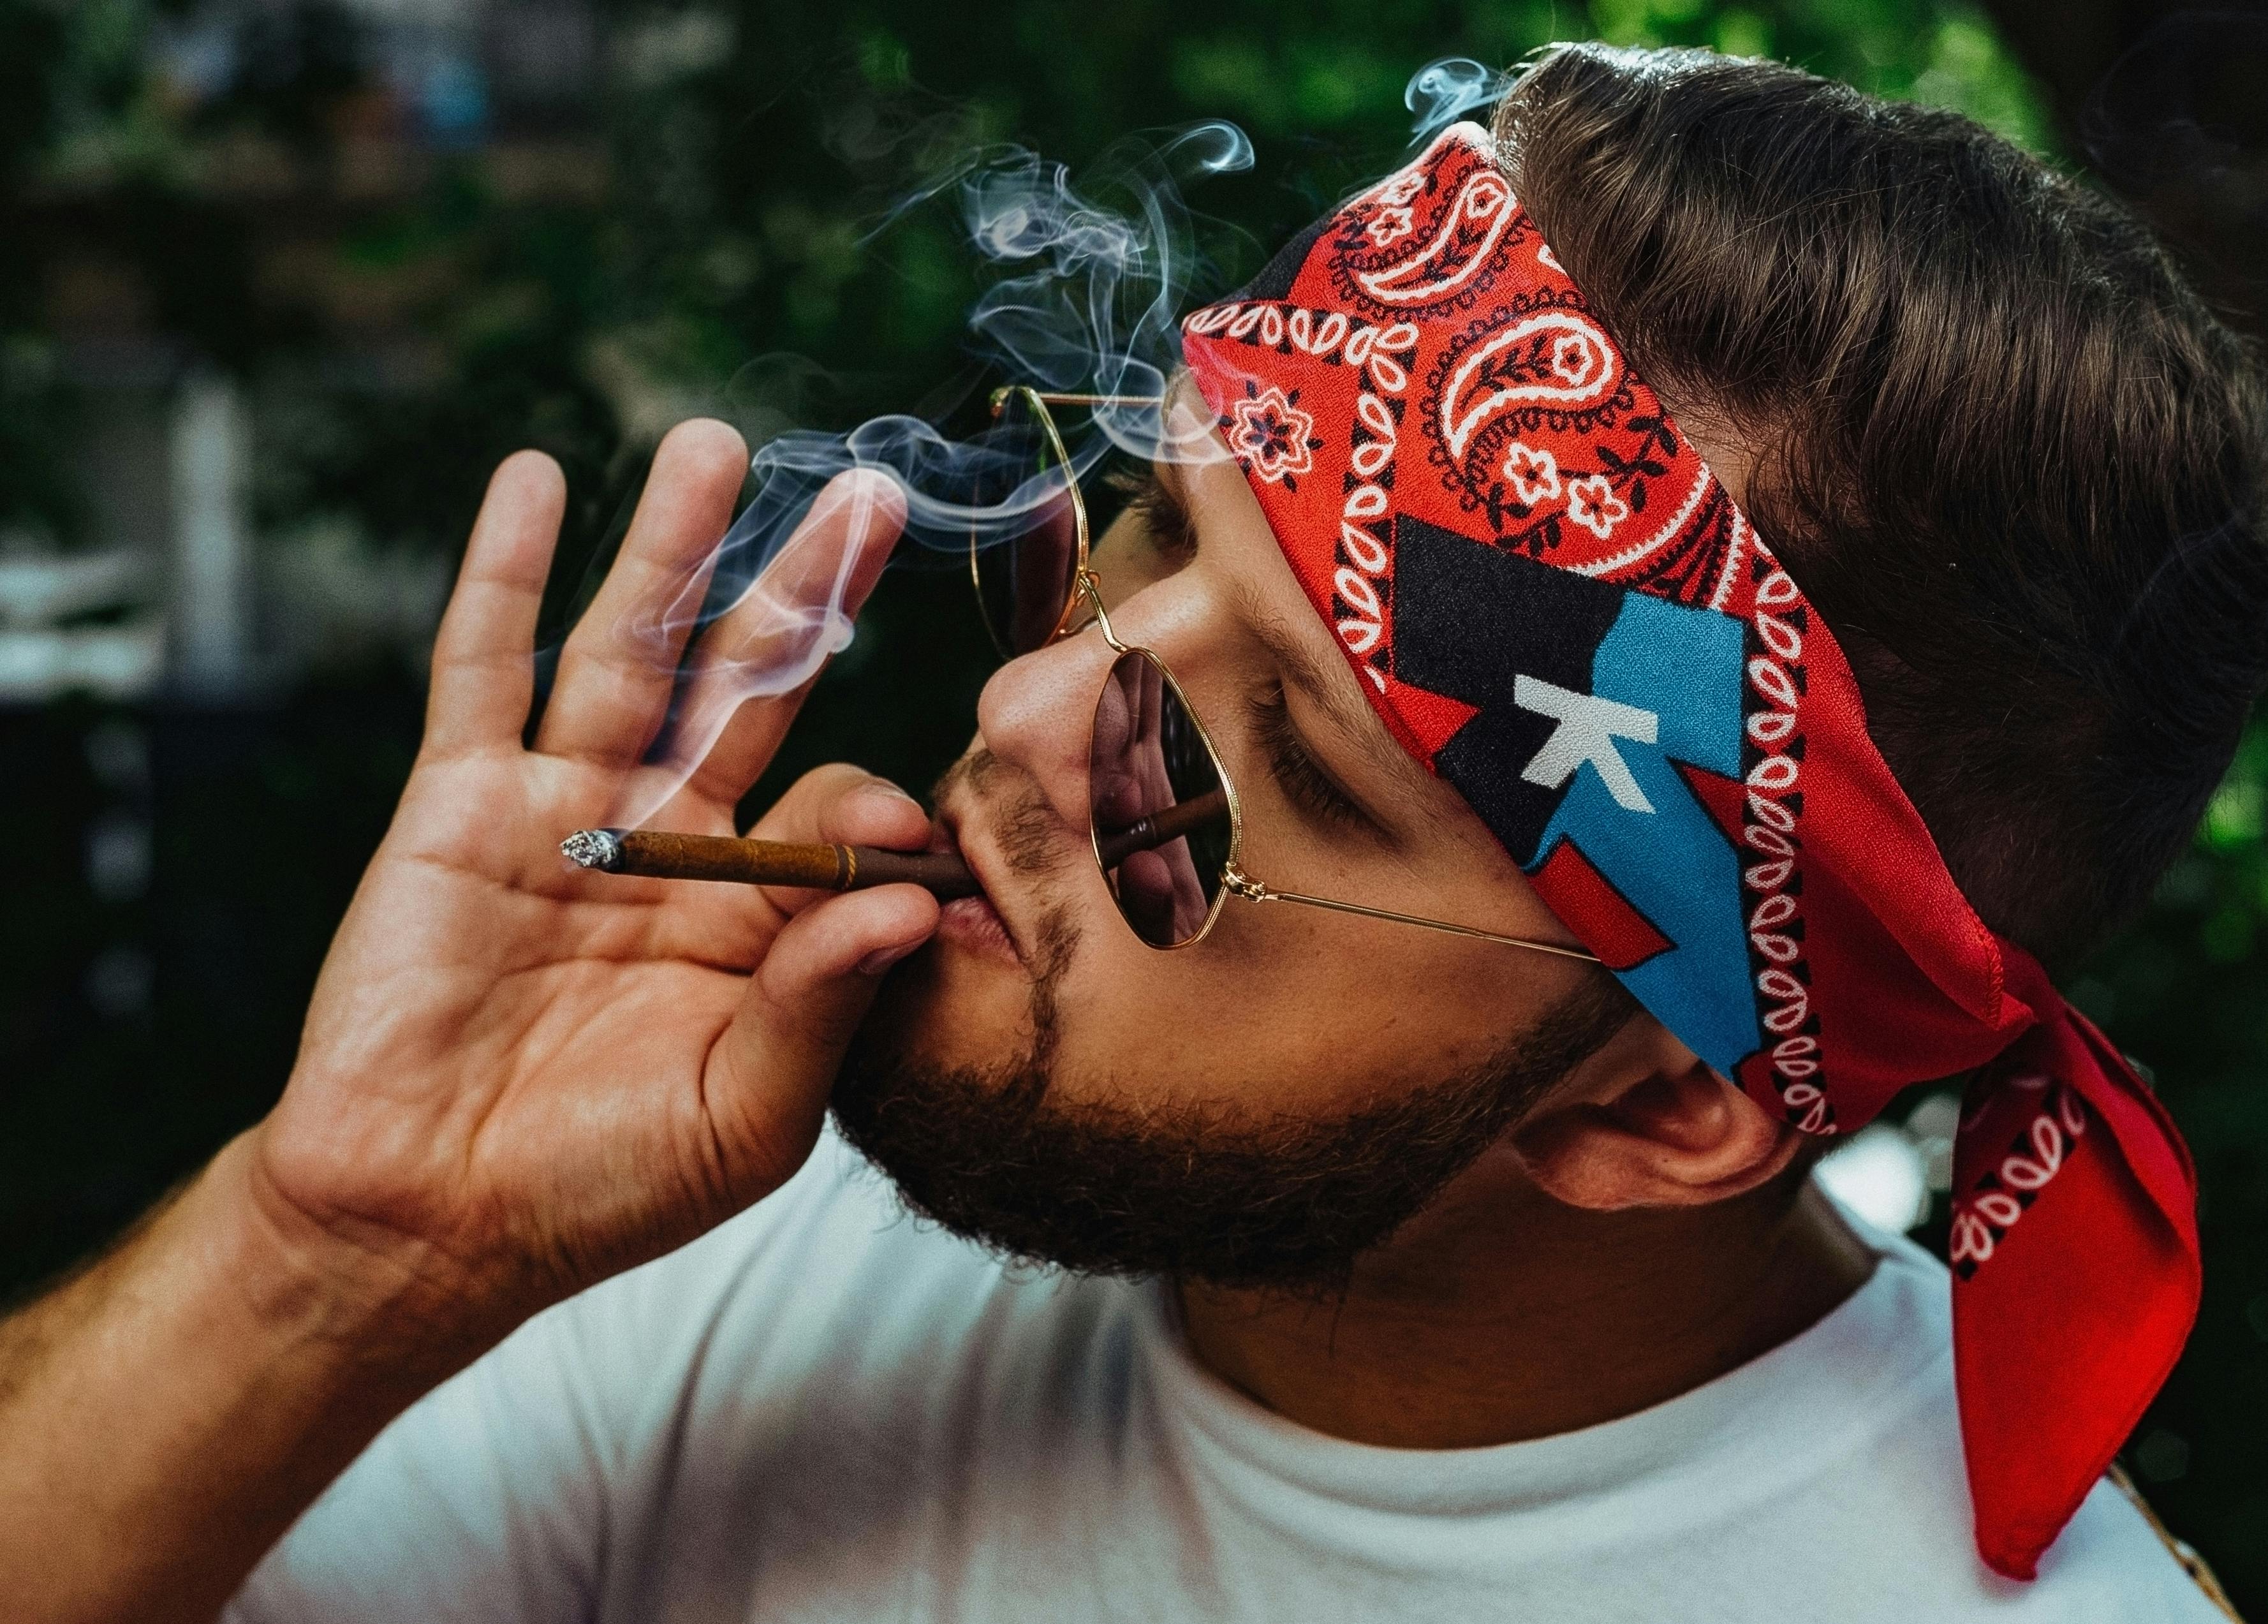 stylish man with headband and sunglasses smoking cigarette